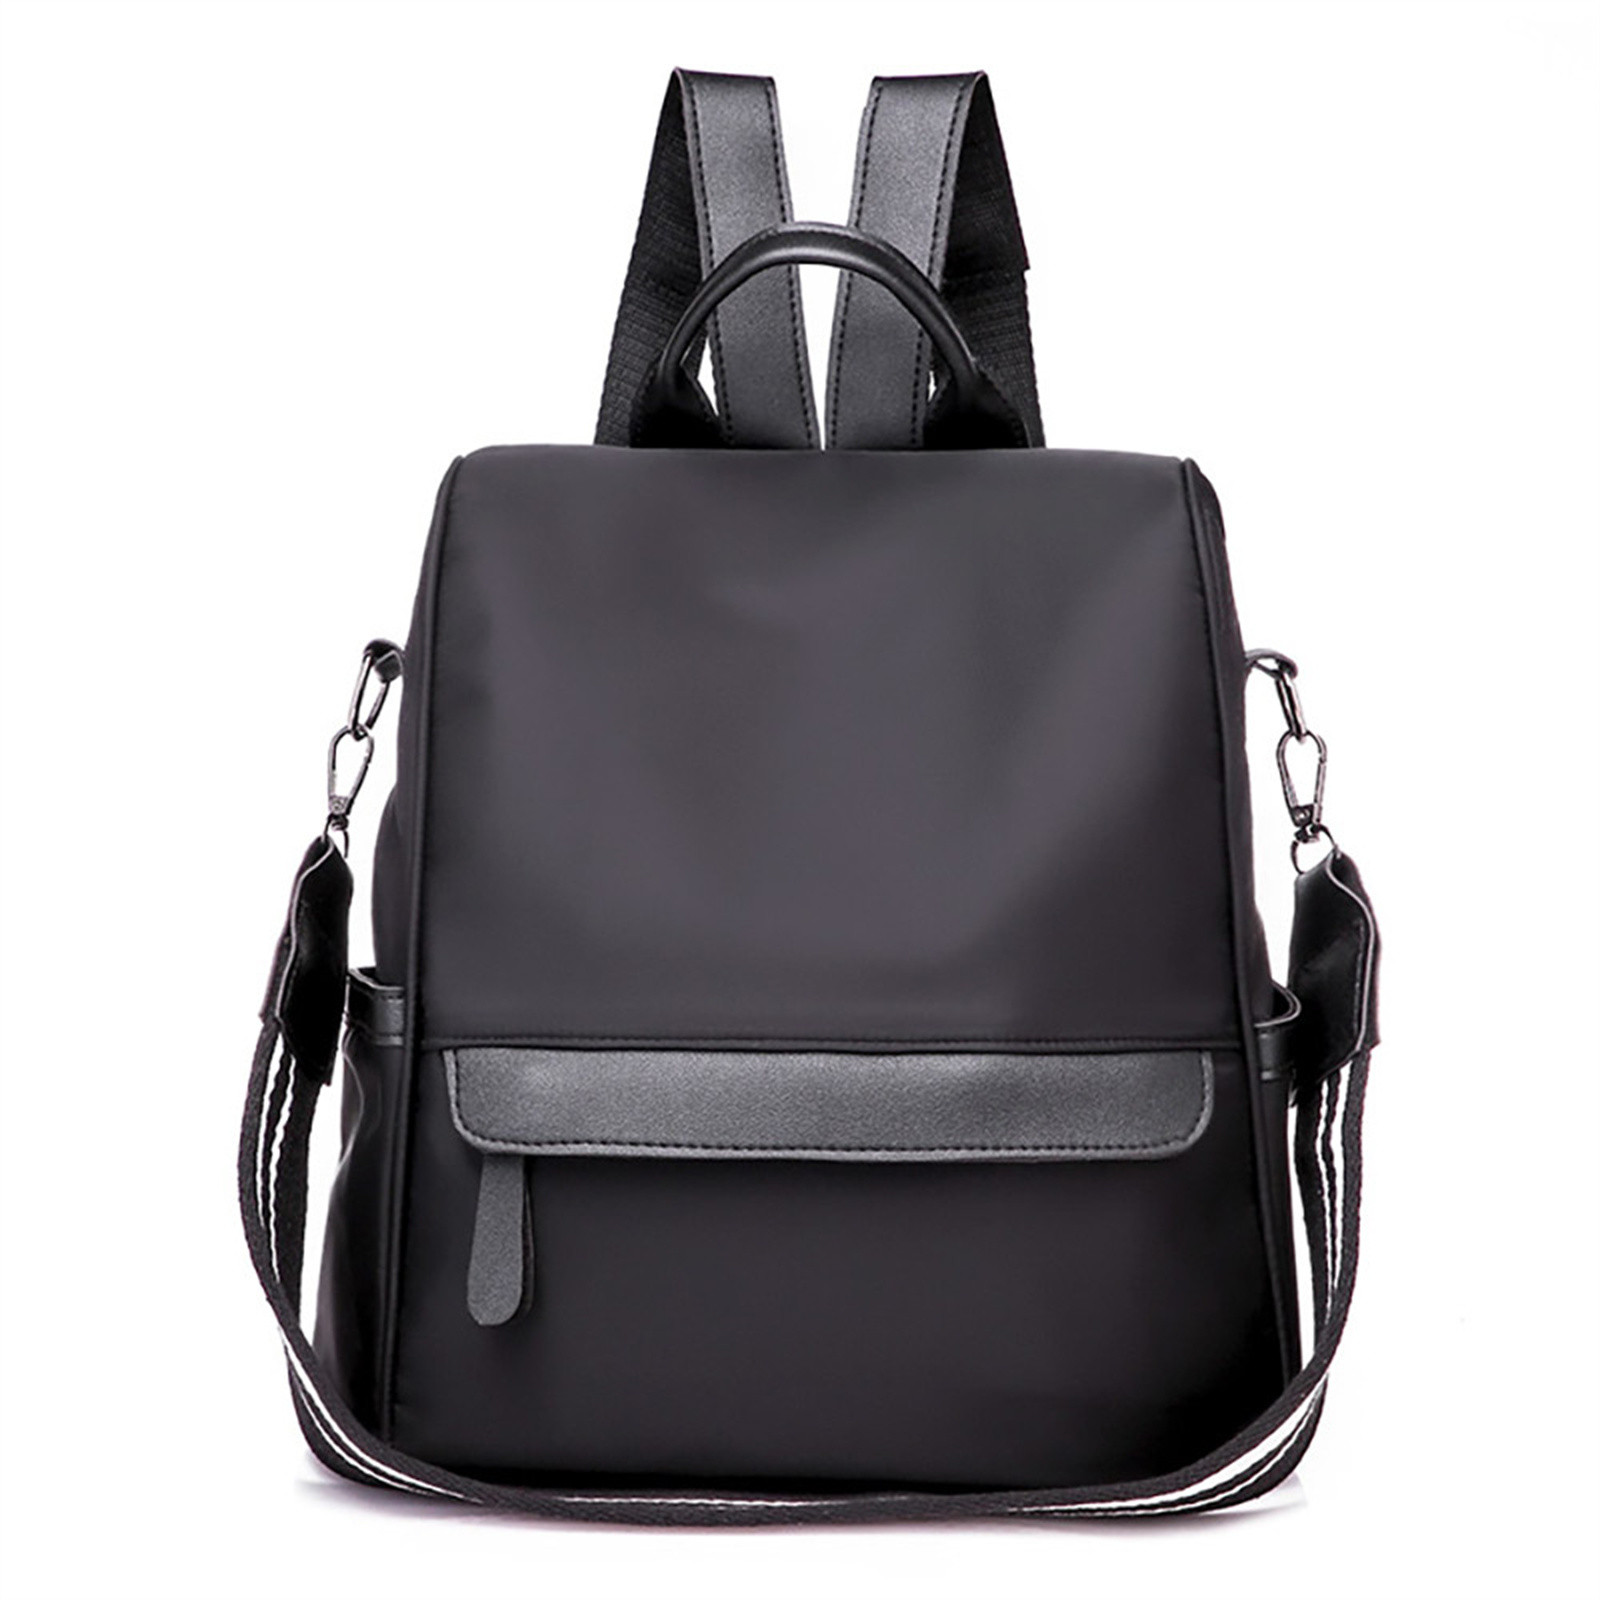 Fnyoxu One Shoulder/two Shoulder Multifunctional Travel Bag,Anti-theft ...